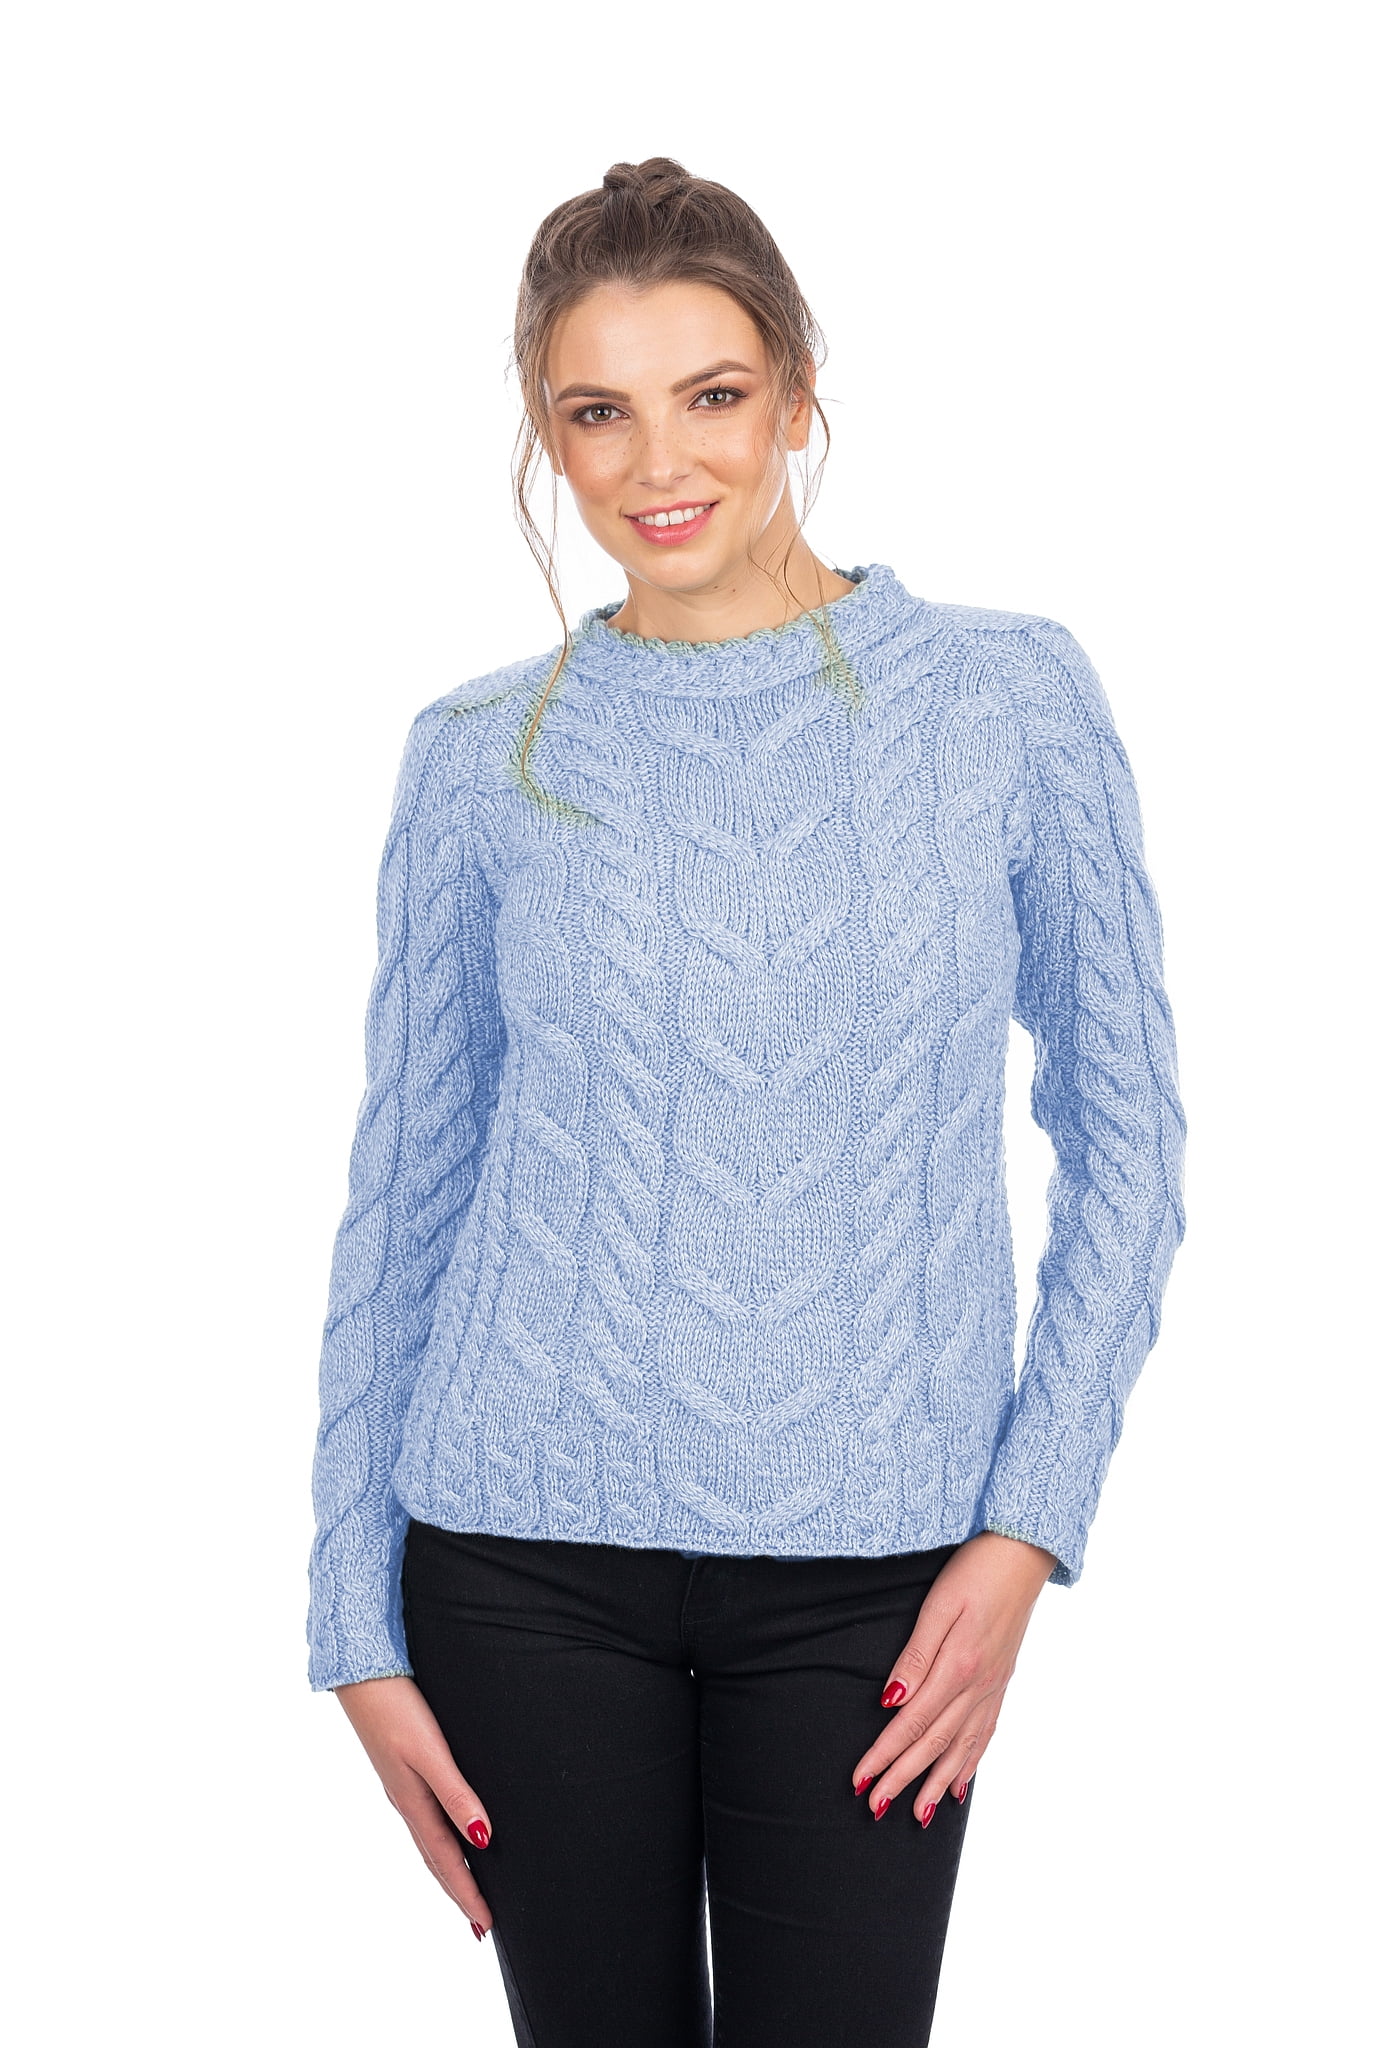 Irish Sweater for Women's 100% Merino Wool Cable Knit Woolen Raglan ...